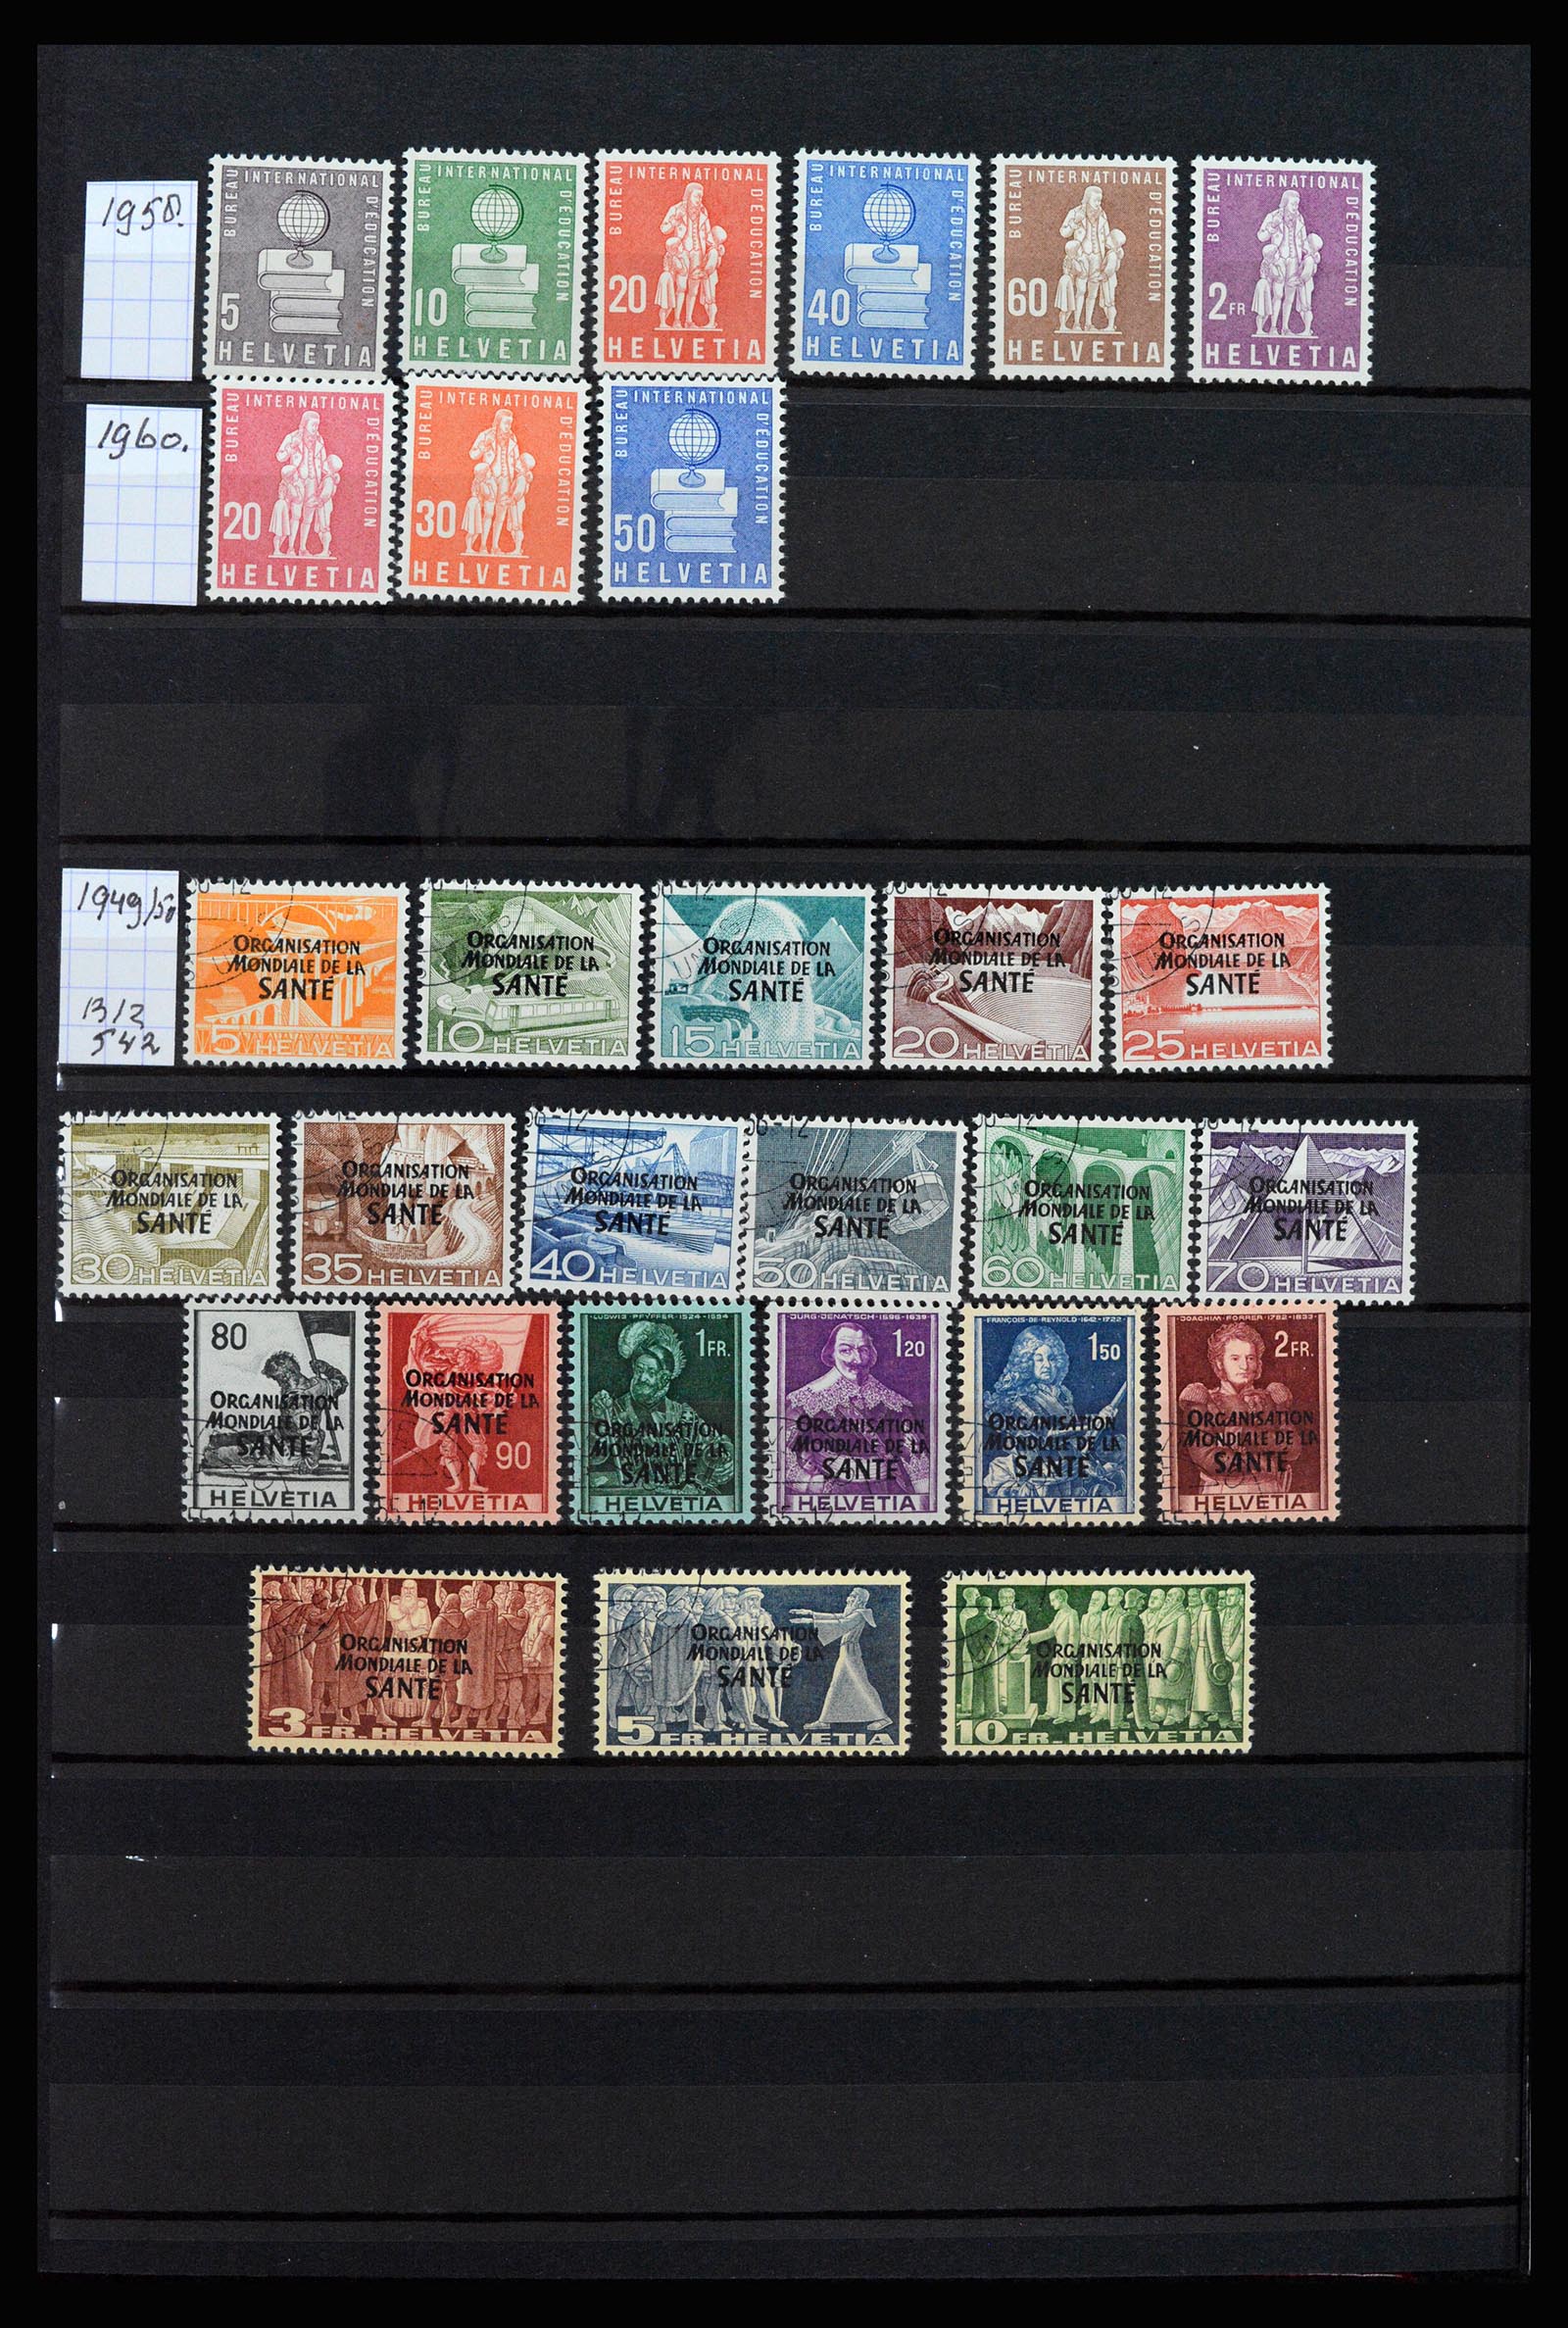 37225 162 - Stamp collection 37225 Switzerland 1854-2020.